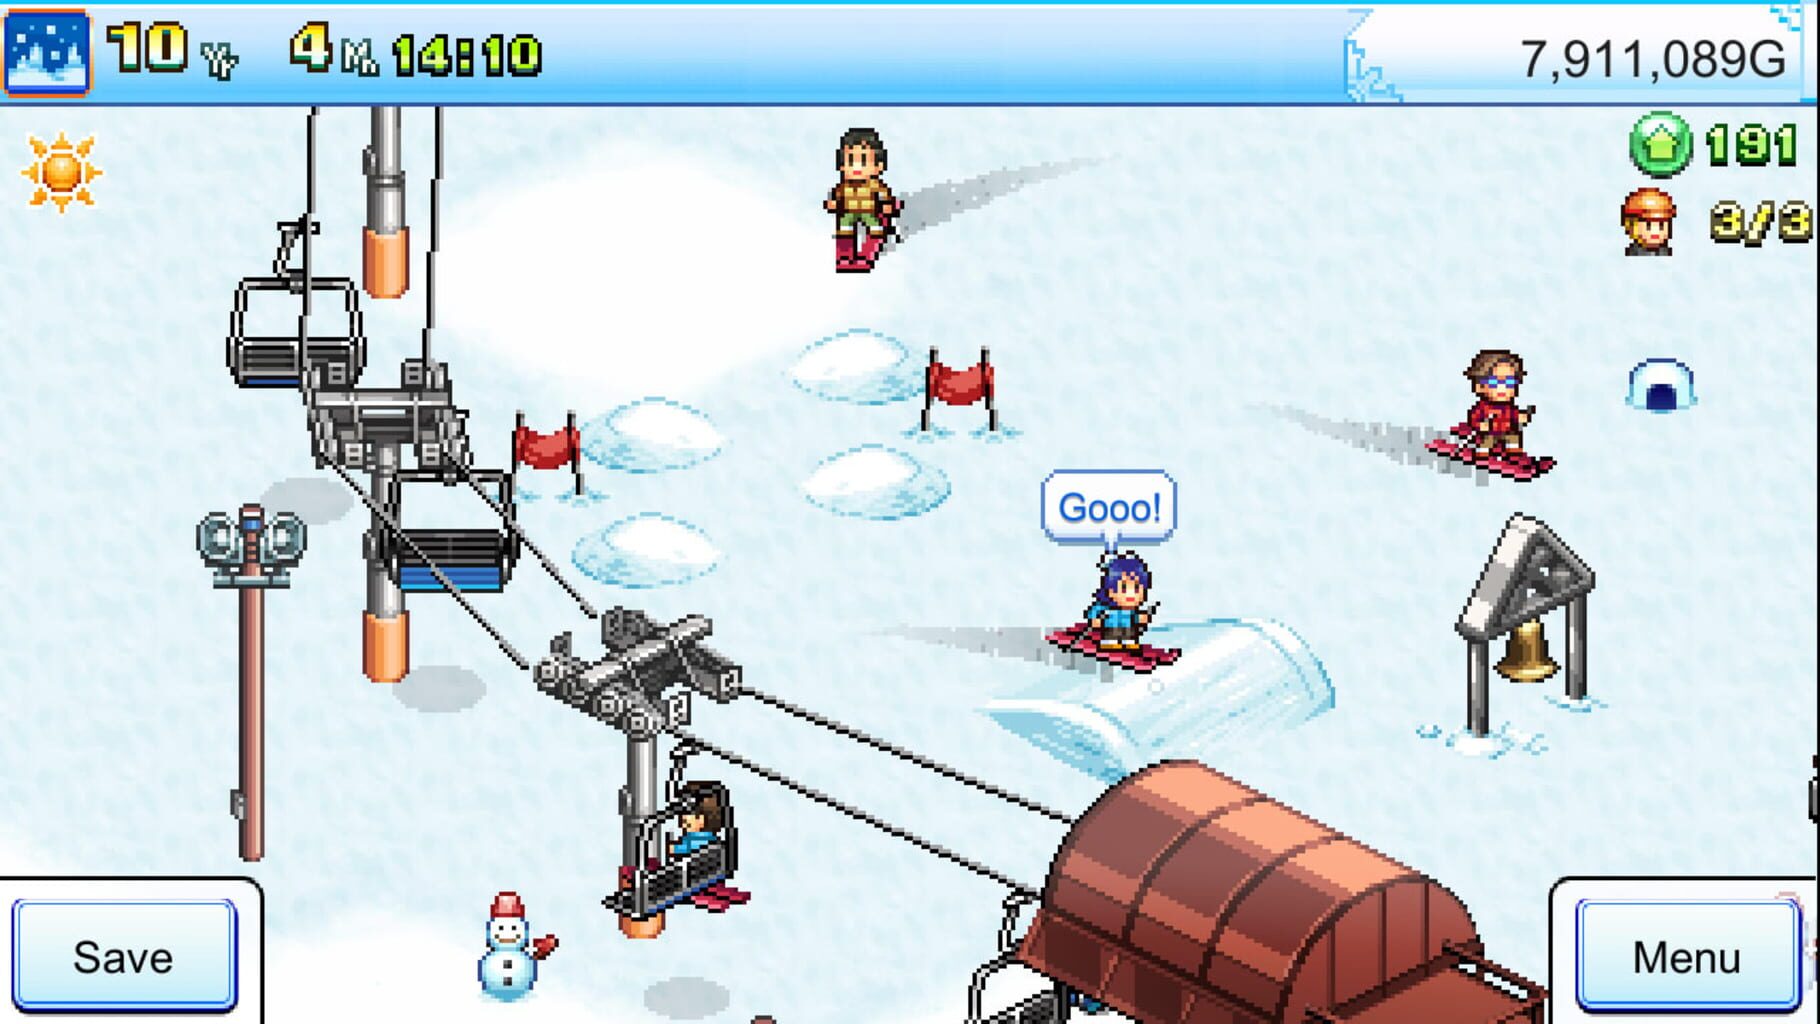 Shiny Ski Resort screenshot